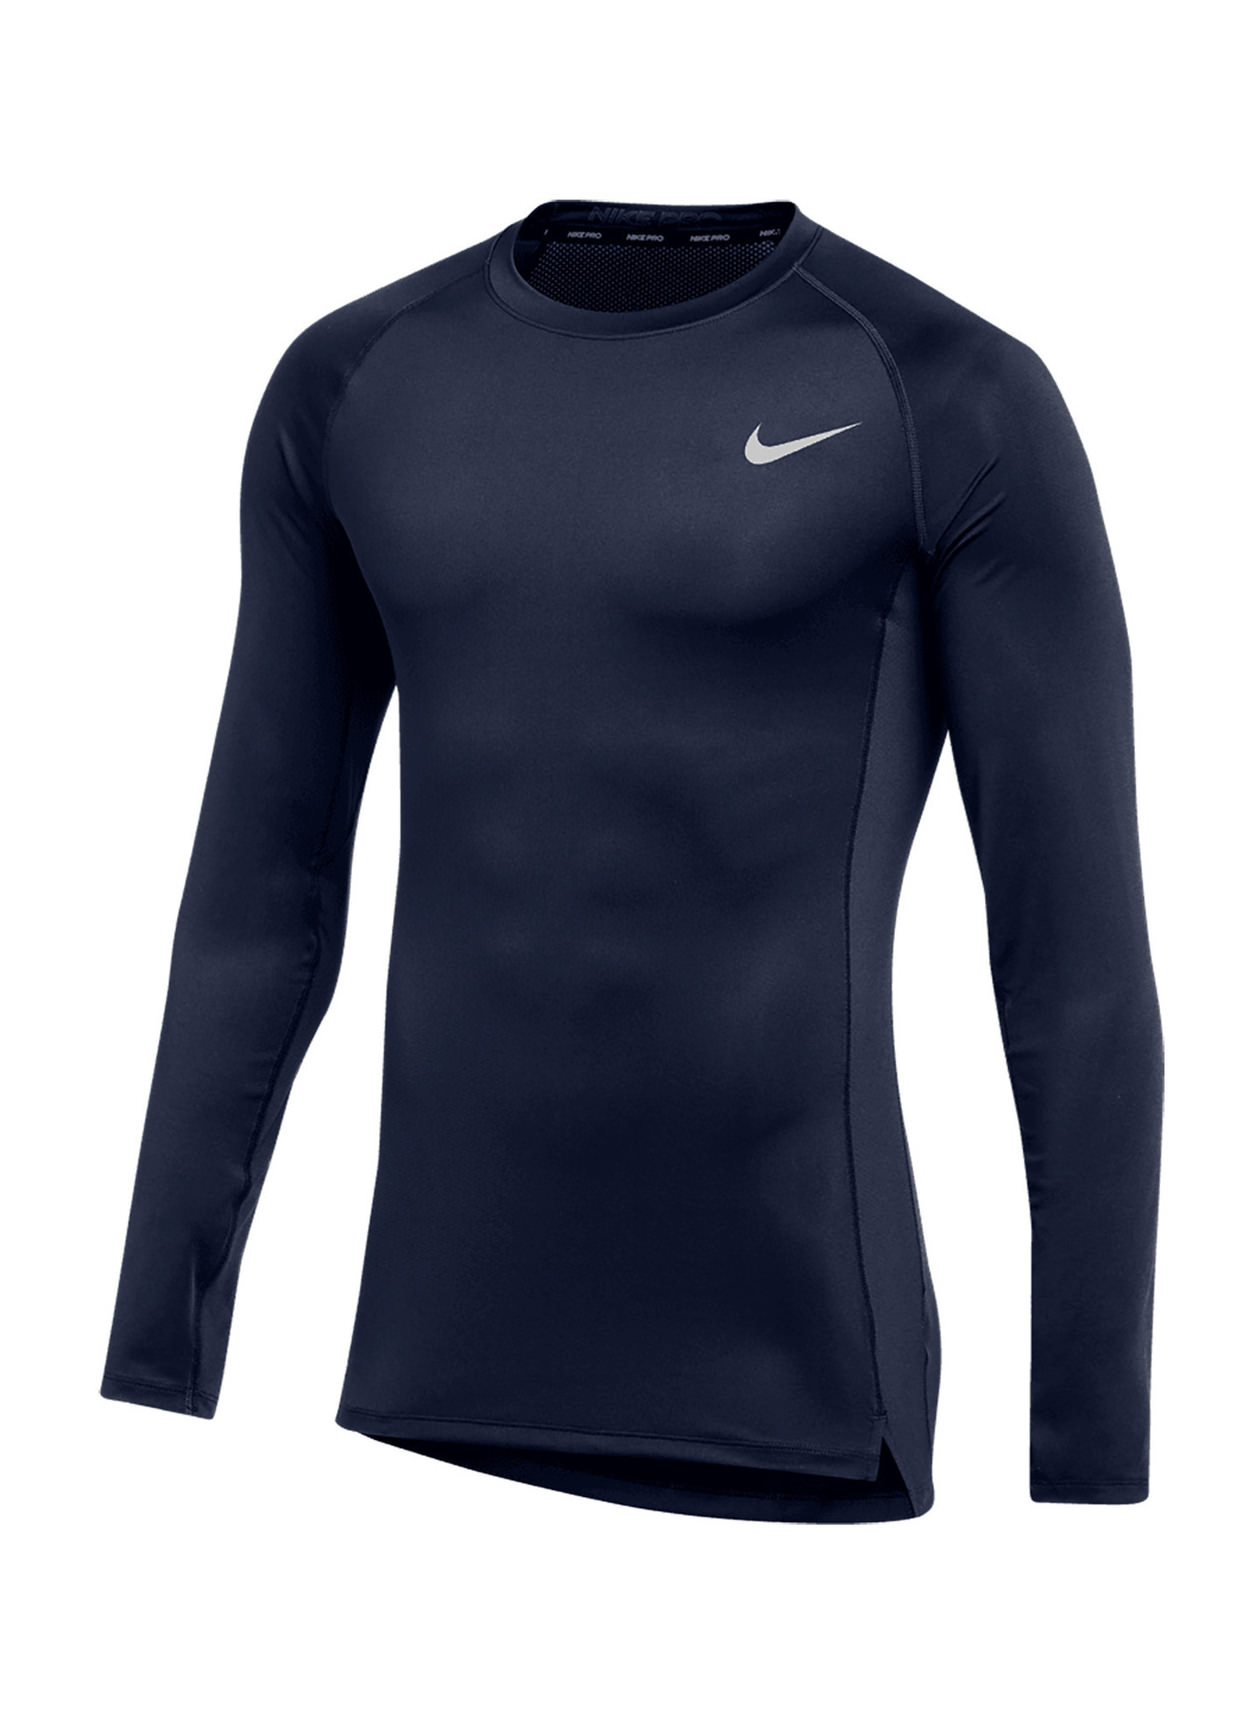 Branded Nike Men's College Navy / White Pro Tight Long-Sleeve T